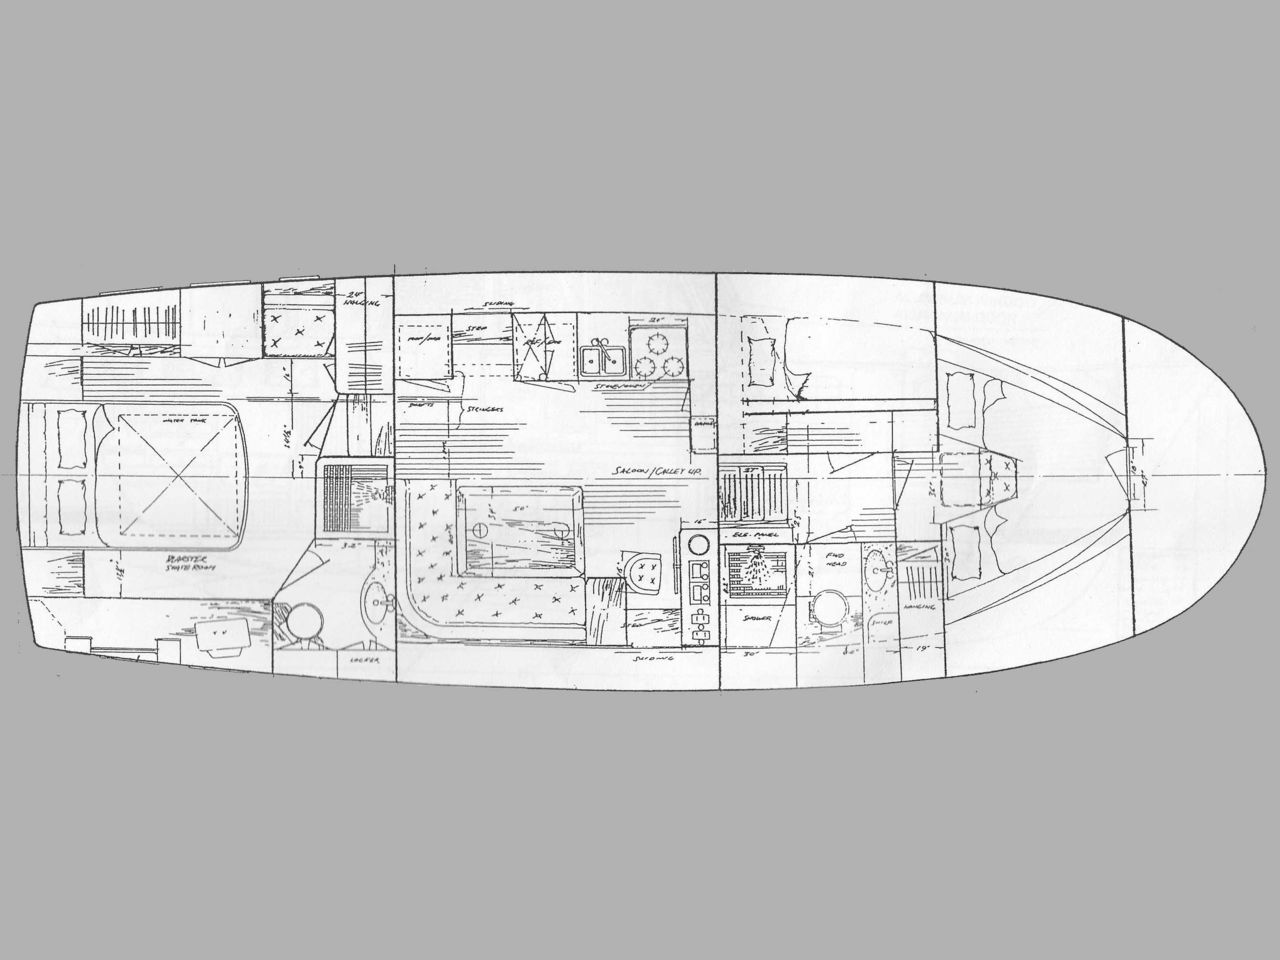 CA-Yachts Classic Adria Trawler - resim 3